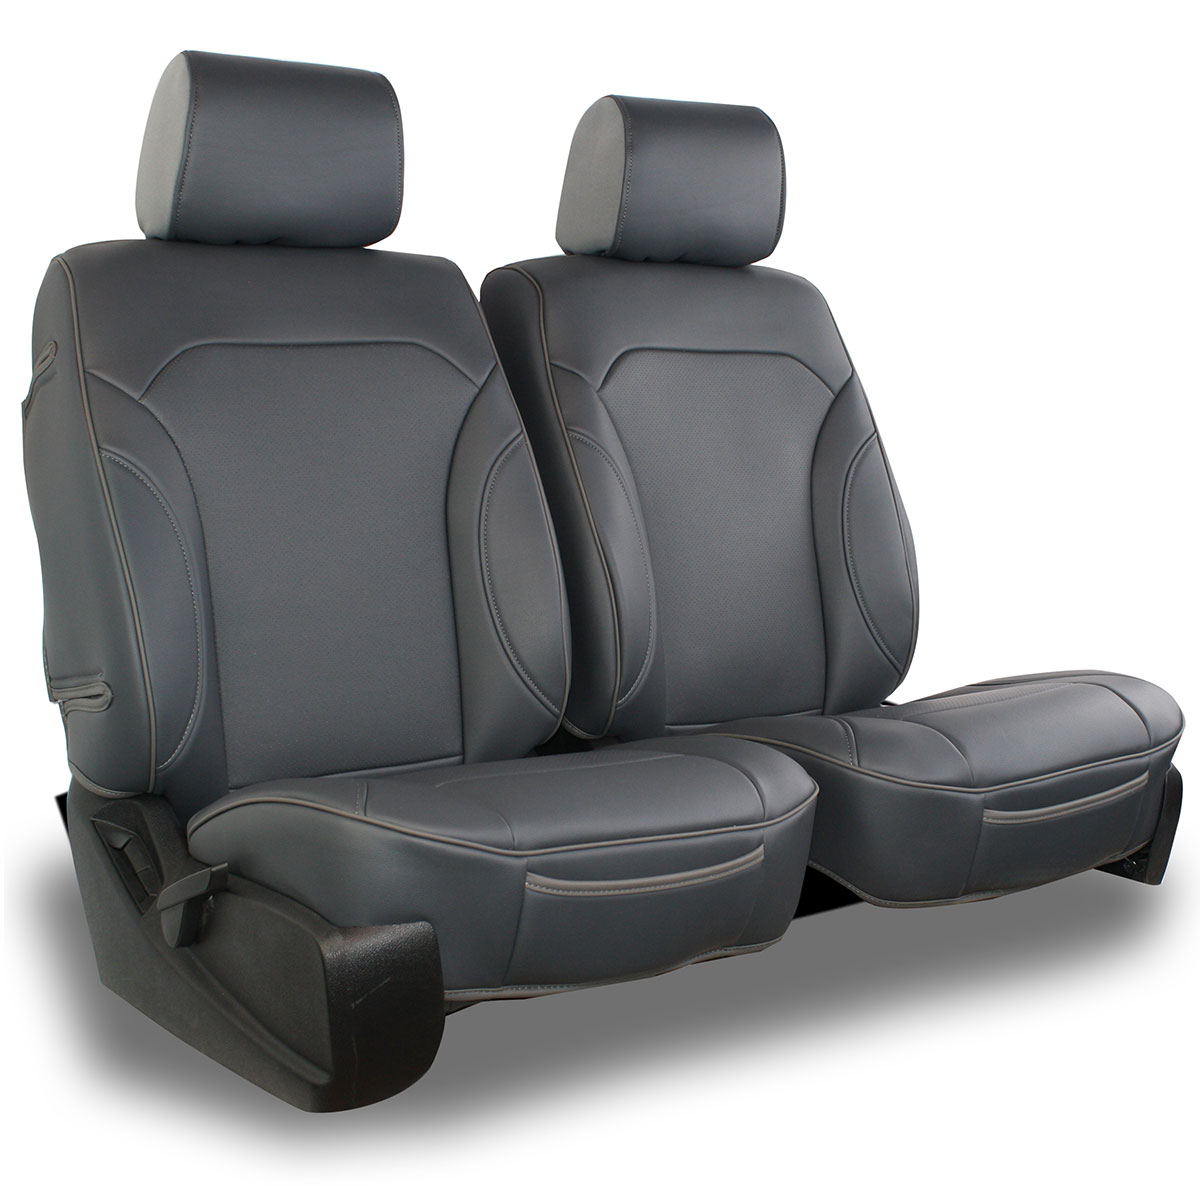 Semi Custom Leatherette Seat Covers - Premium Quality